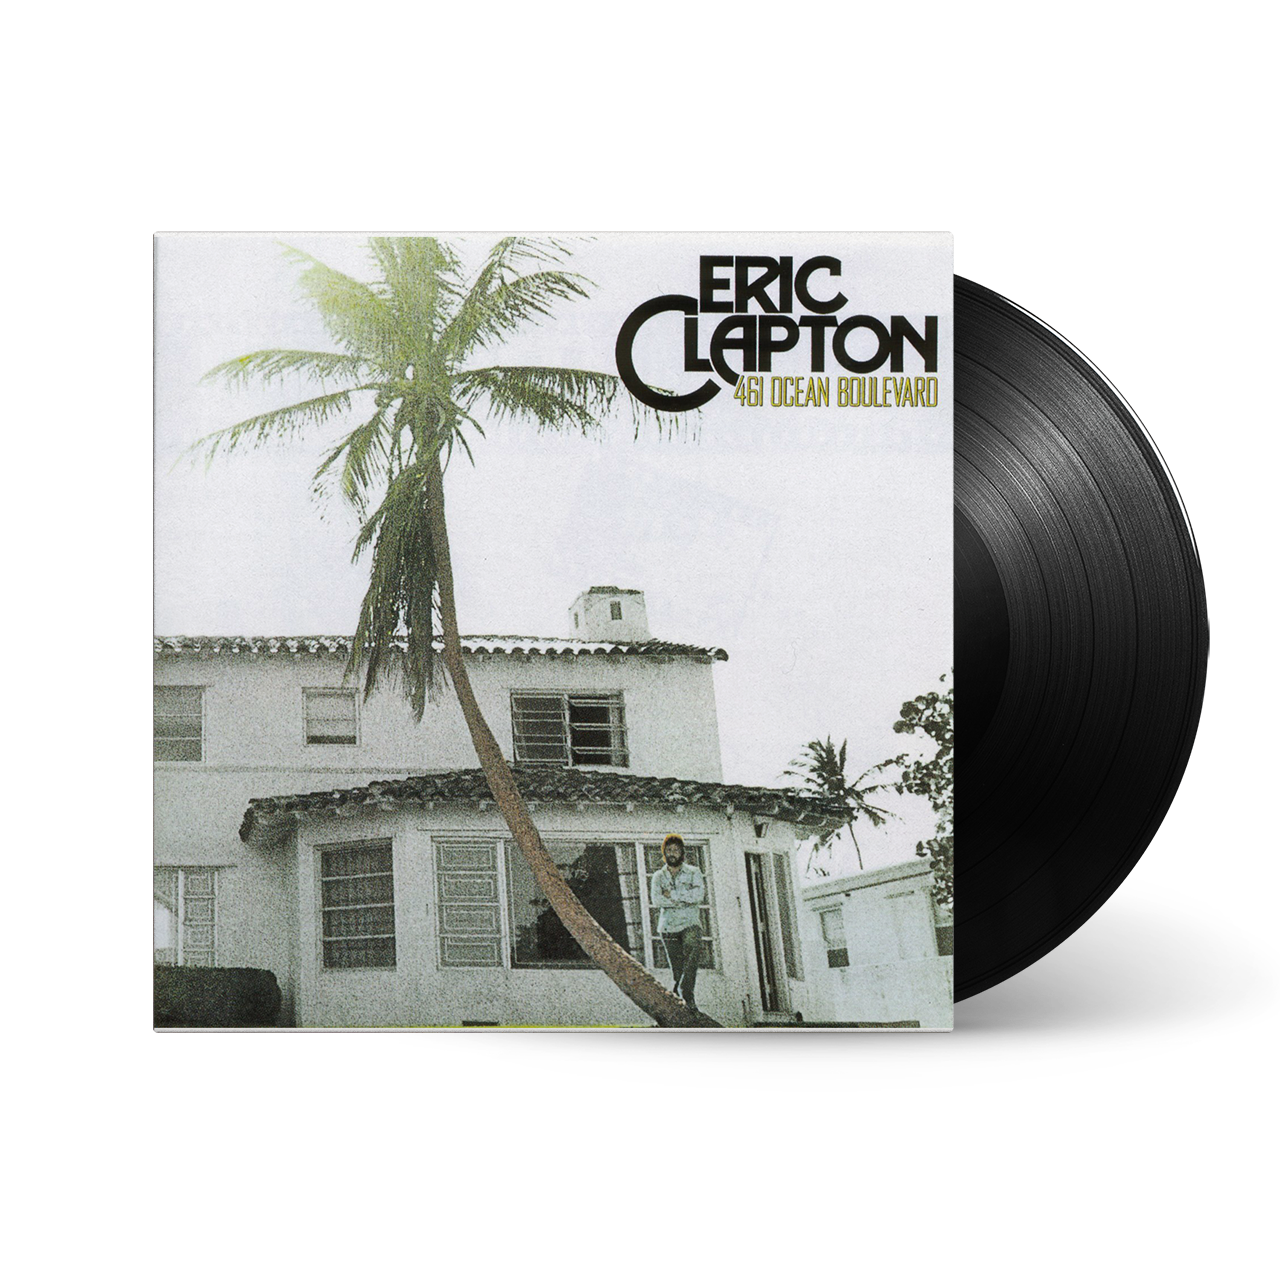 Eric Clapton - Eric Clapton - 461 Ocean Boulevard: Vinyl LP - Polydor Store  UK